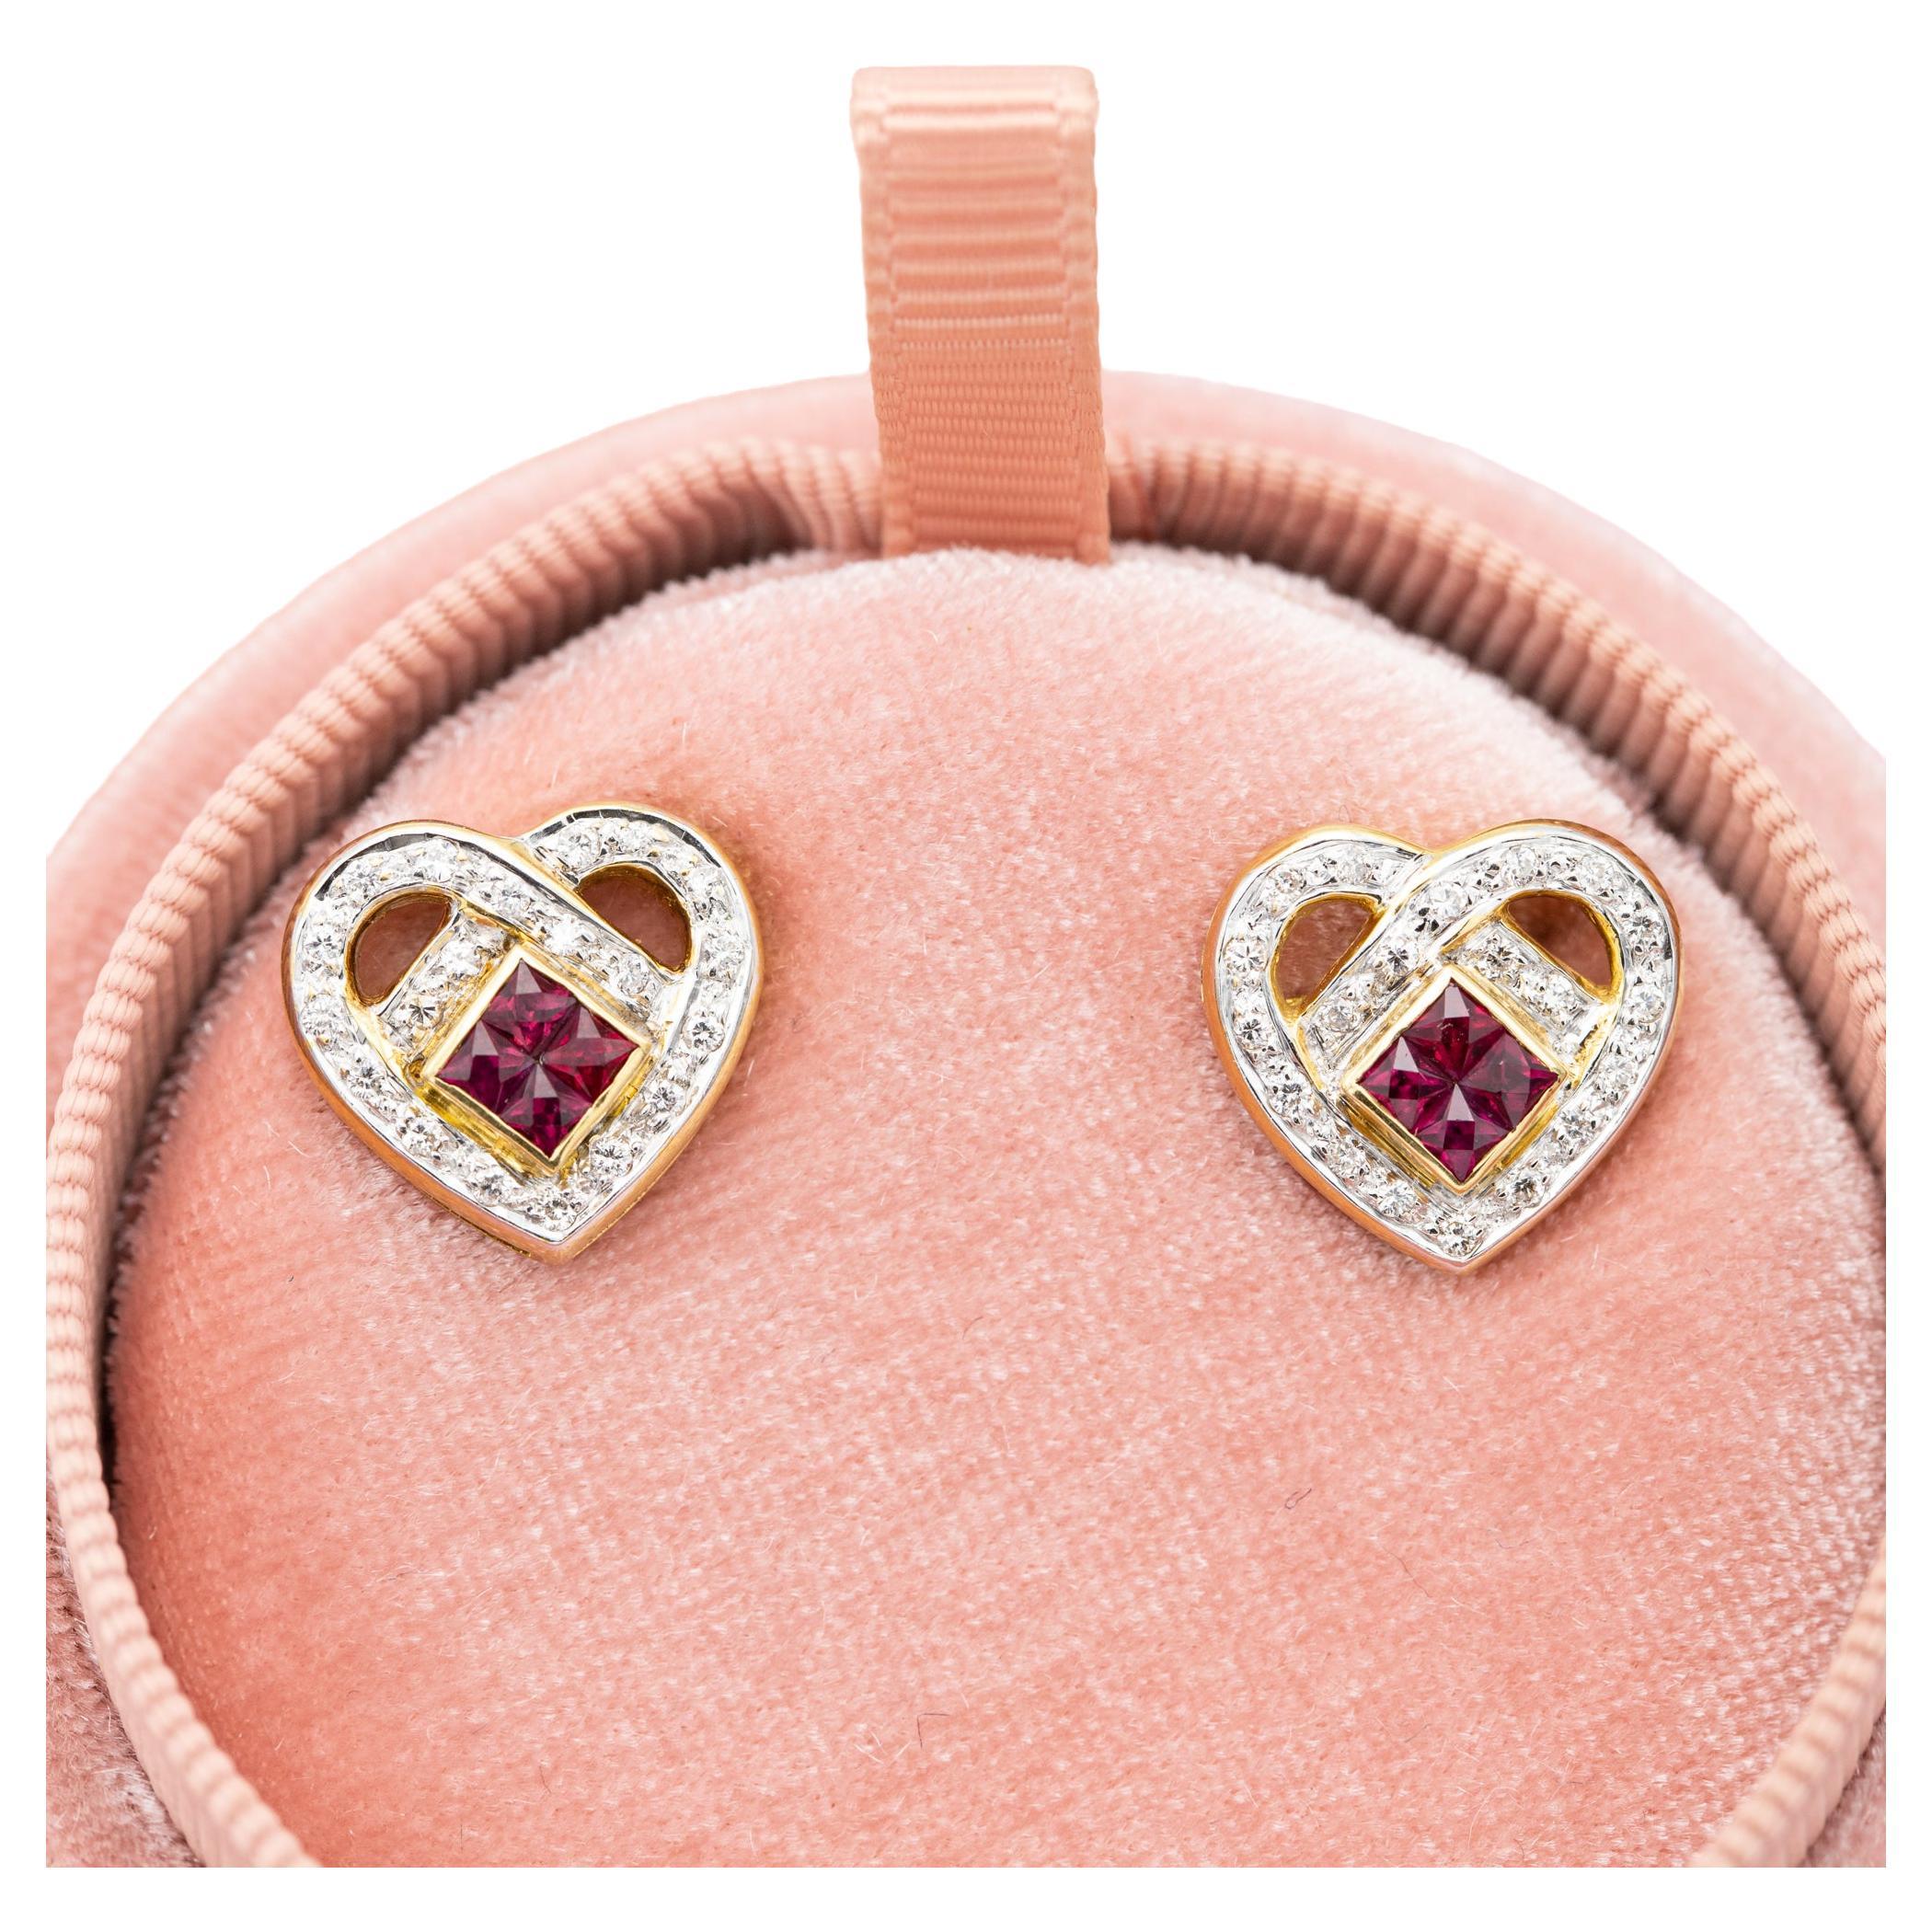 18K yellow gold heart earrings - estate ruby & diamond studs - Romantic gift  For Sale